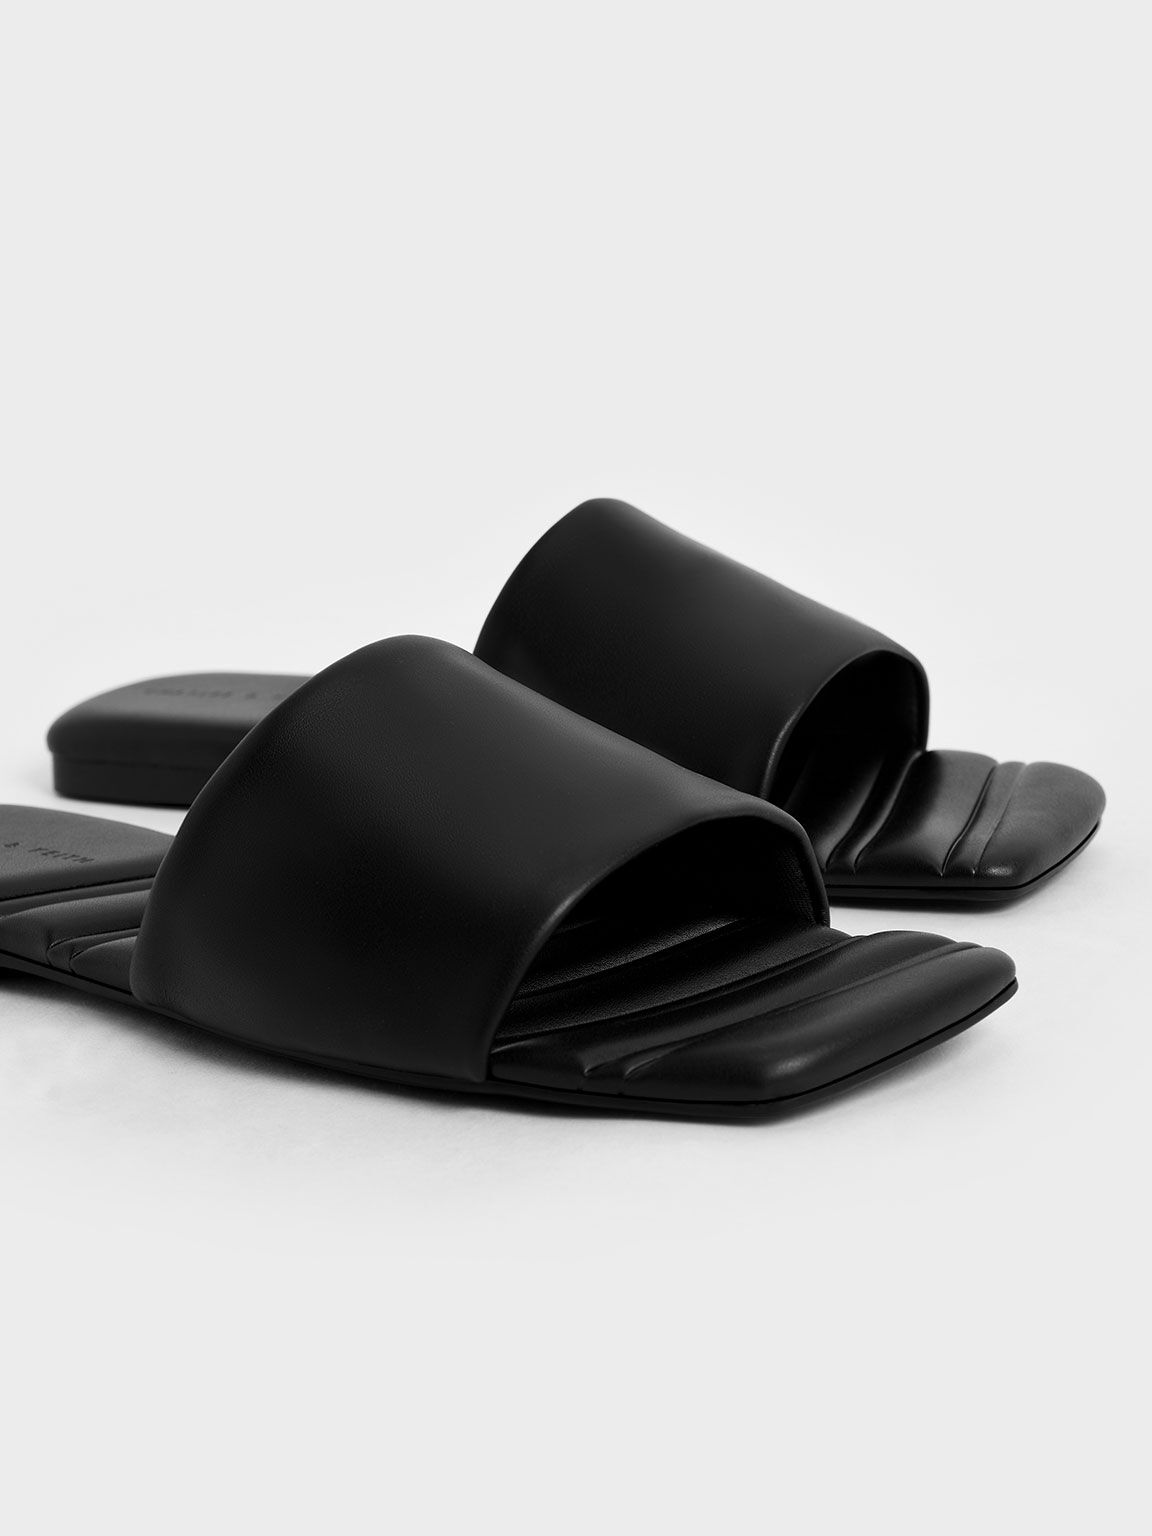 Sandal Slide Padded Square Toe, Black, hi-res